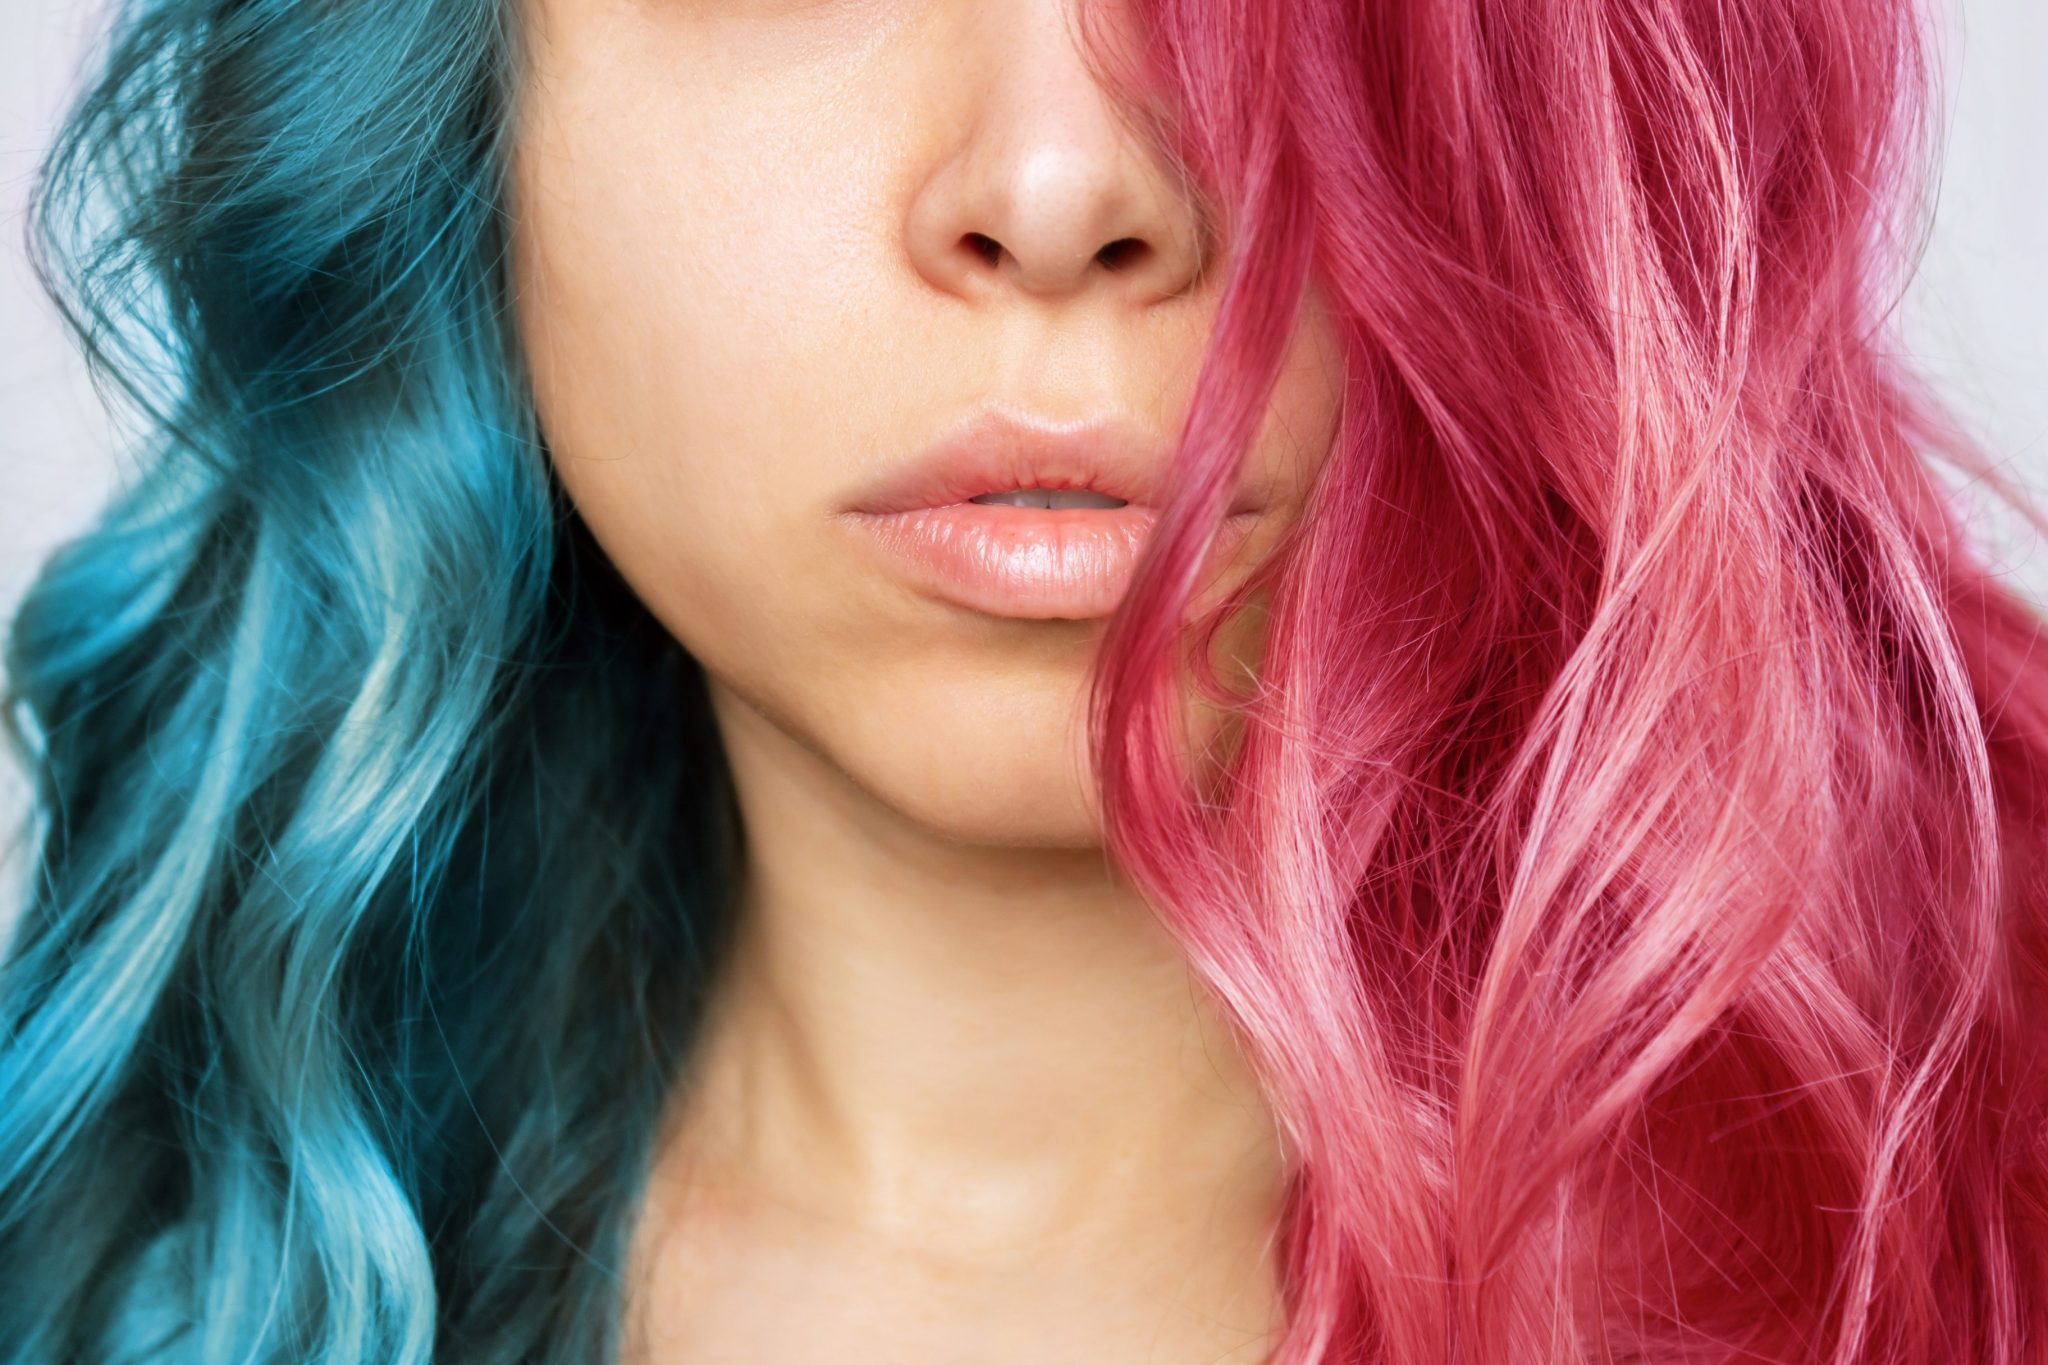 6. "Punky Colour Semi-Permanent Hair Color" in "Atlantic Blue" - wide 3